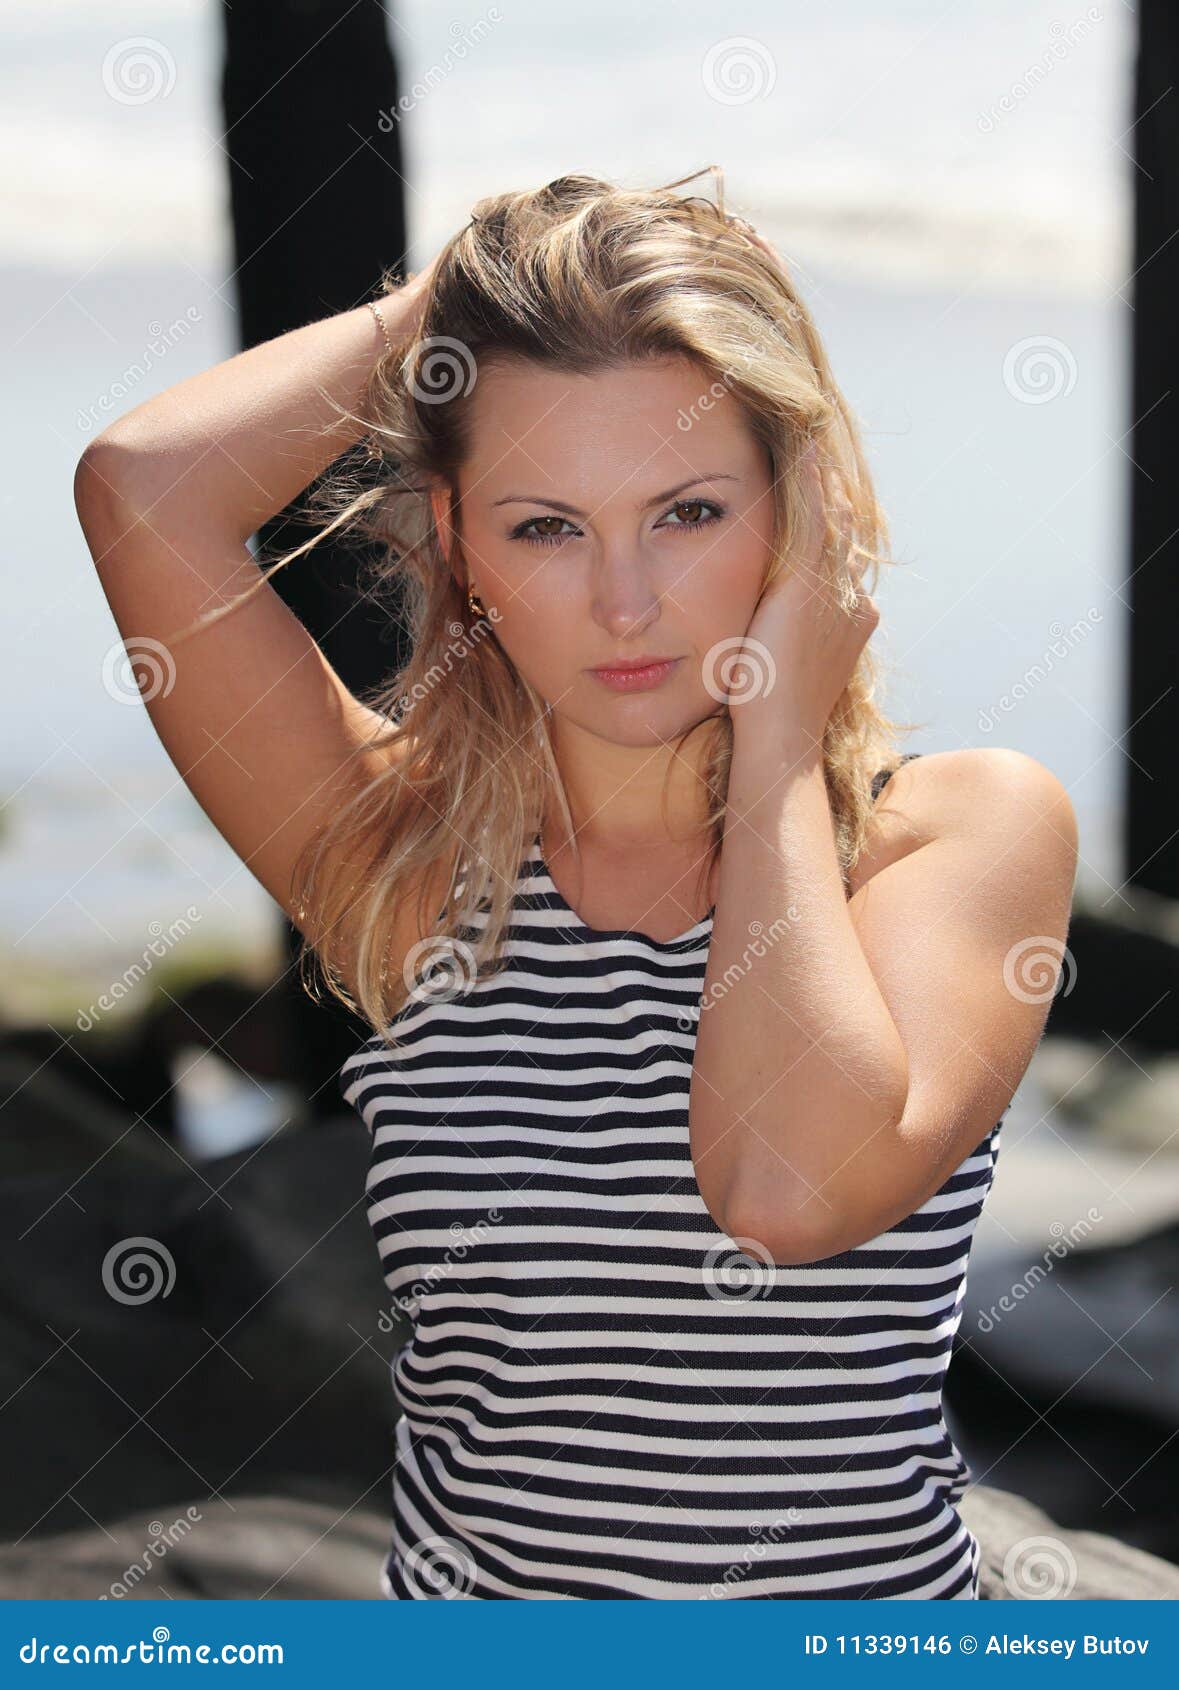 A beautiful russian girl stock photo. Image of sand, beautiful - 11339146